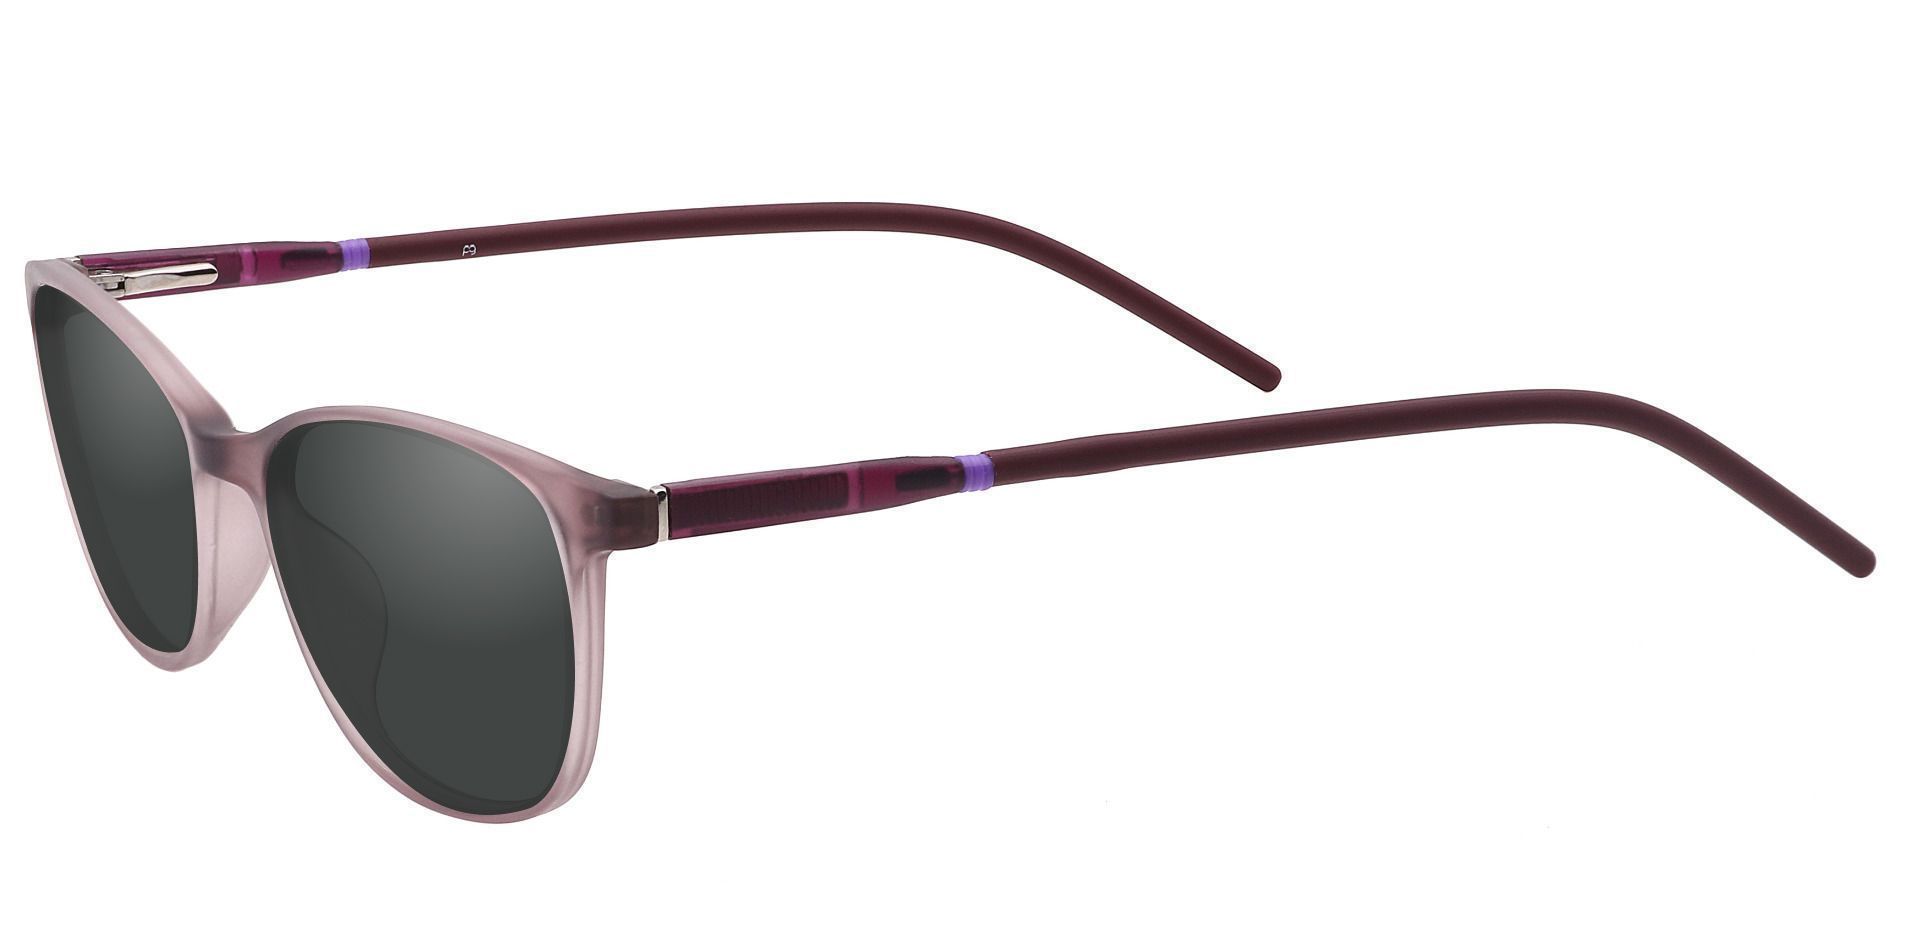 Hazel Square Progressive Sunglasses - Purple Frame With Gray Lenses